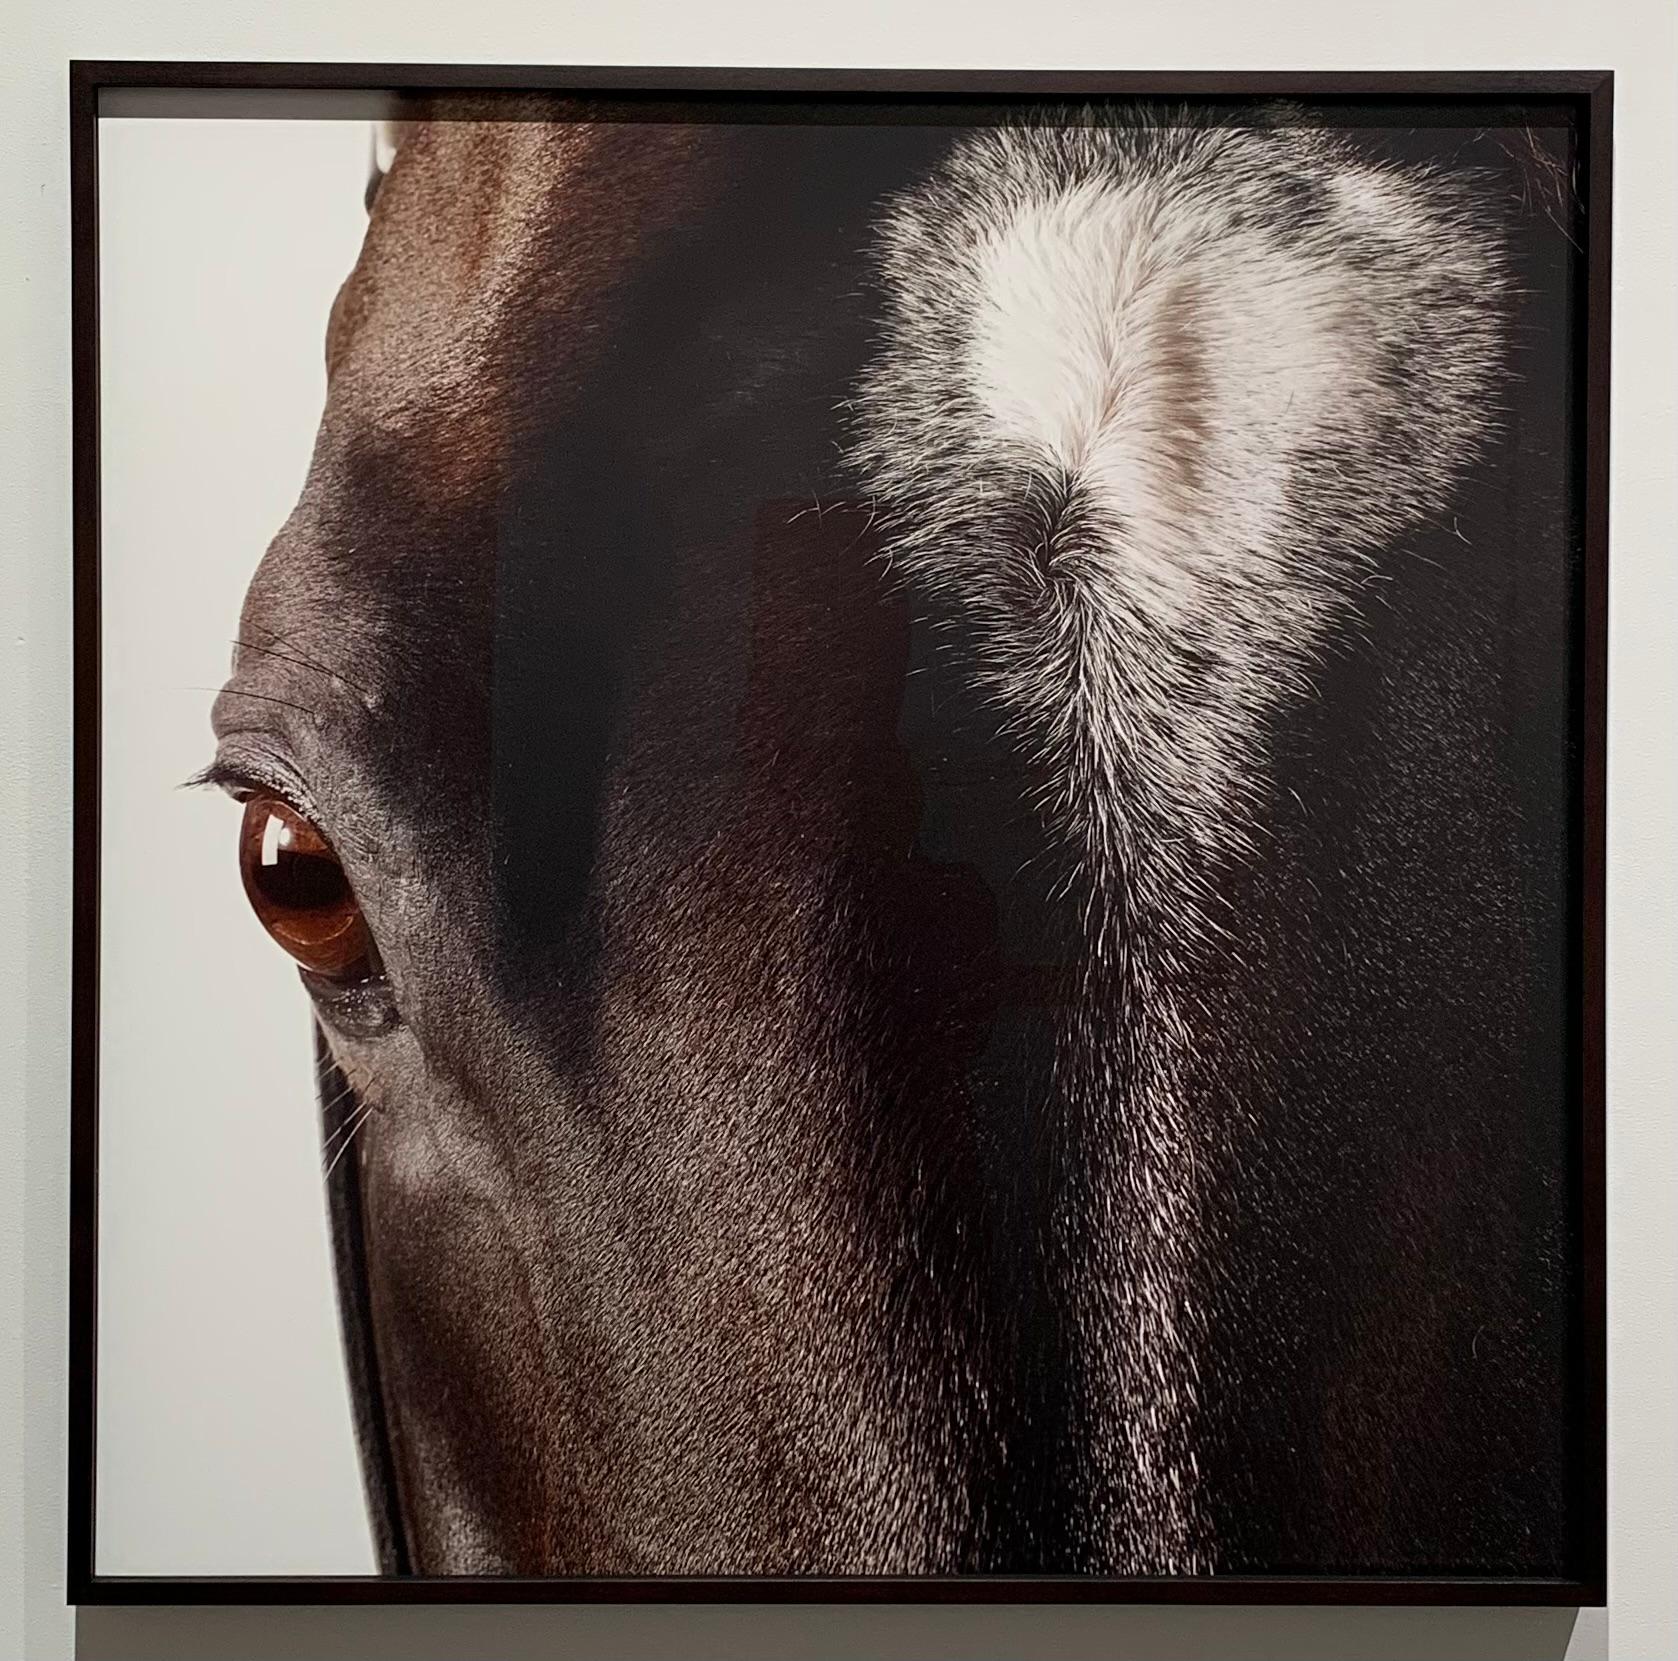 Studio Portrait: Medaglia d’Oro, Horse head and eye - Stallion Portrait - Print by John Reardon